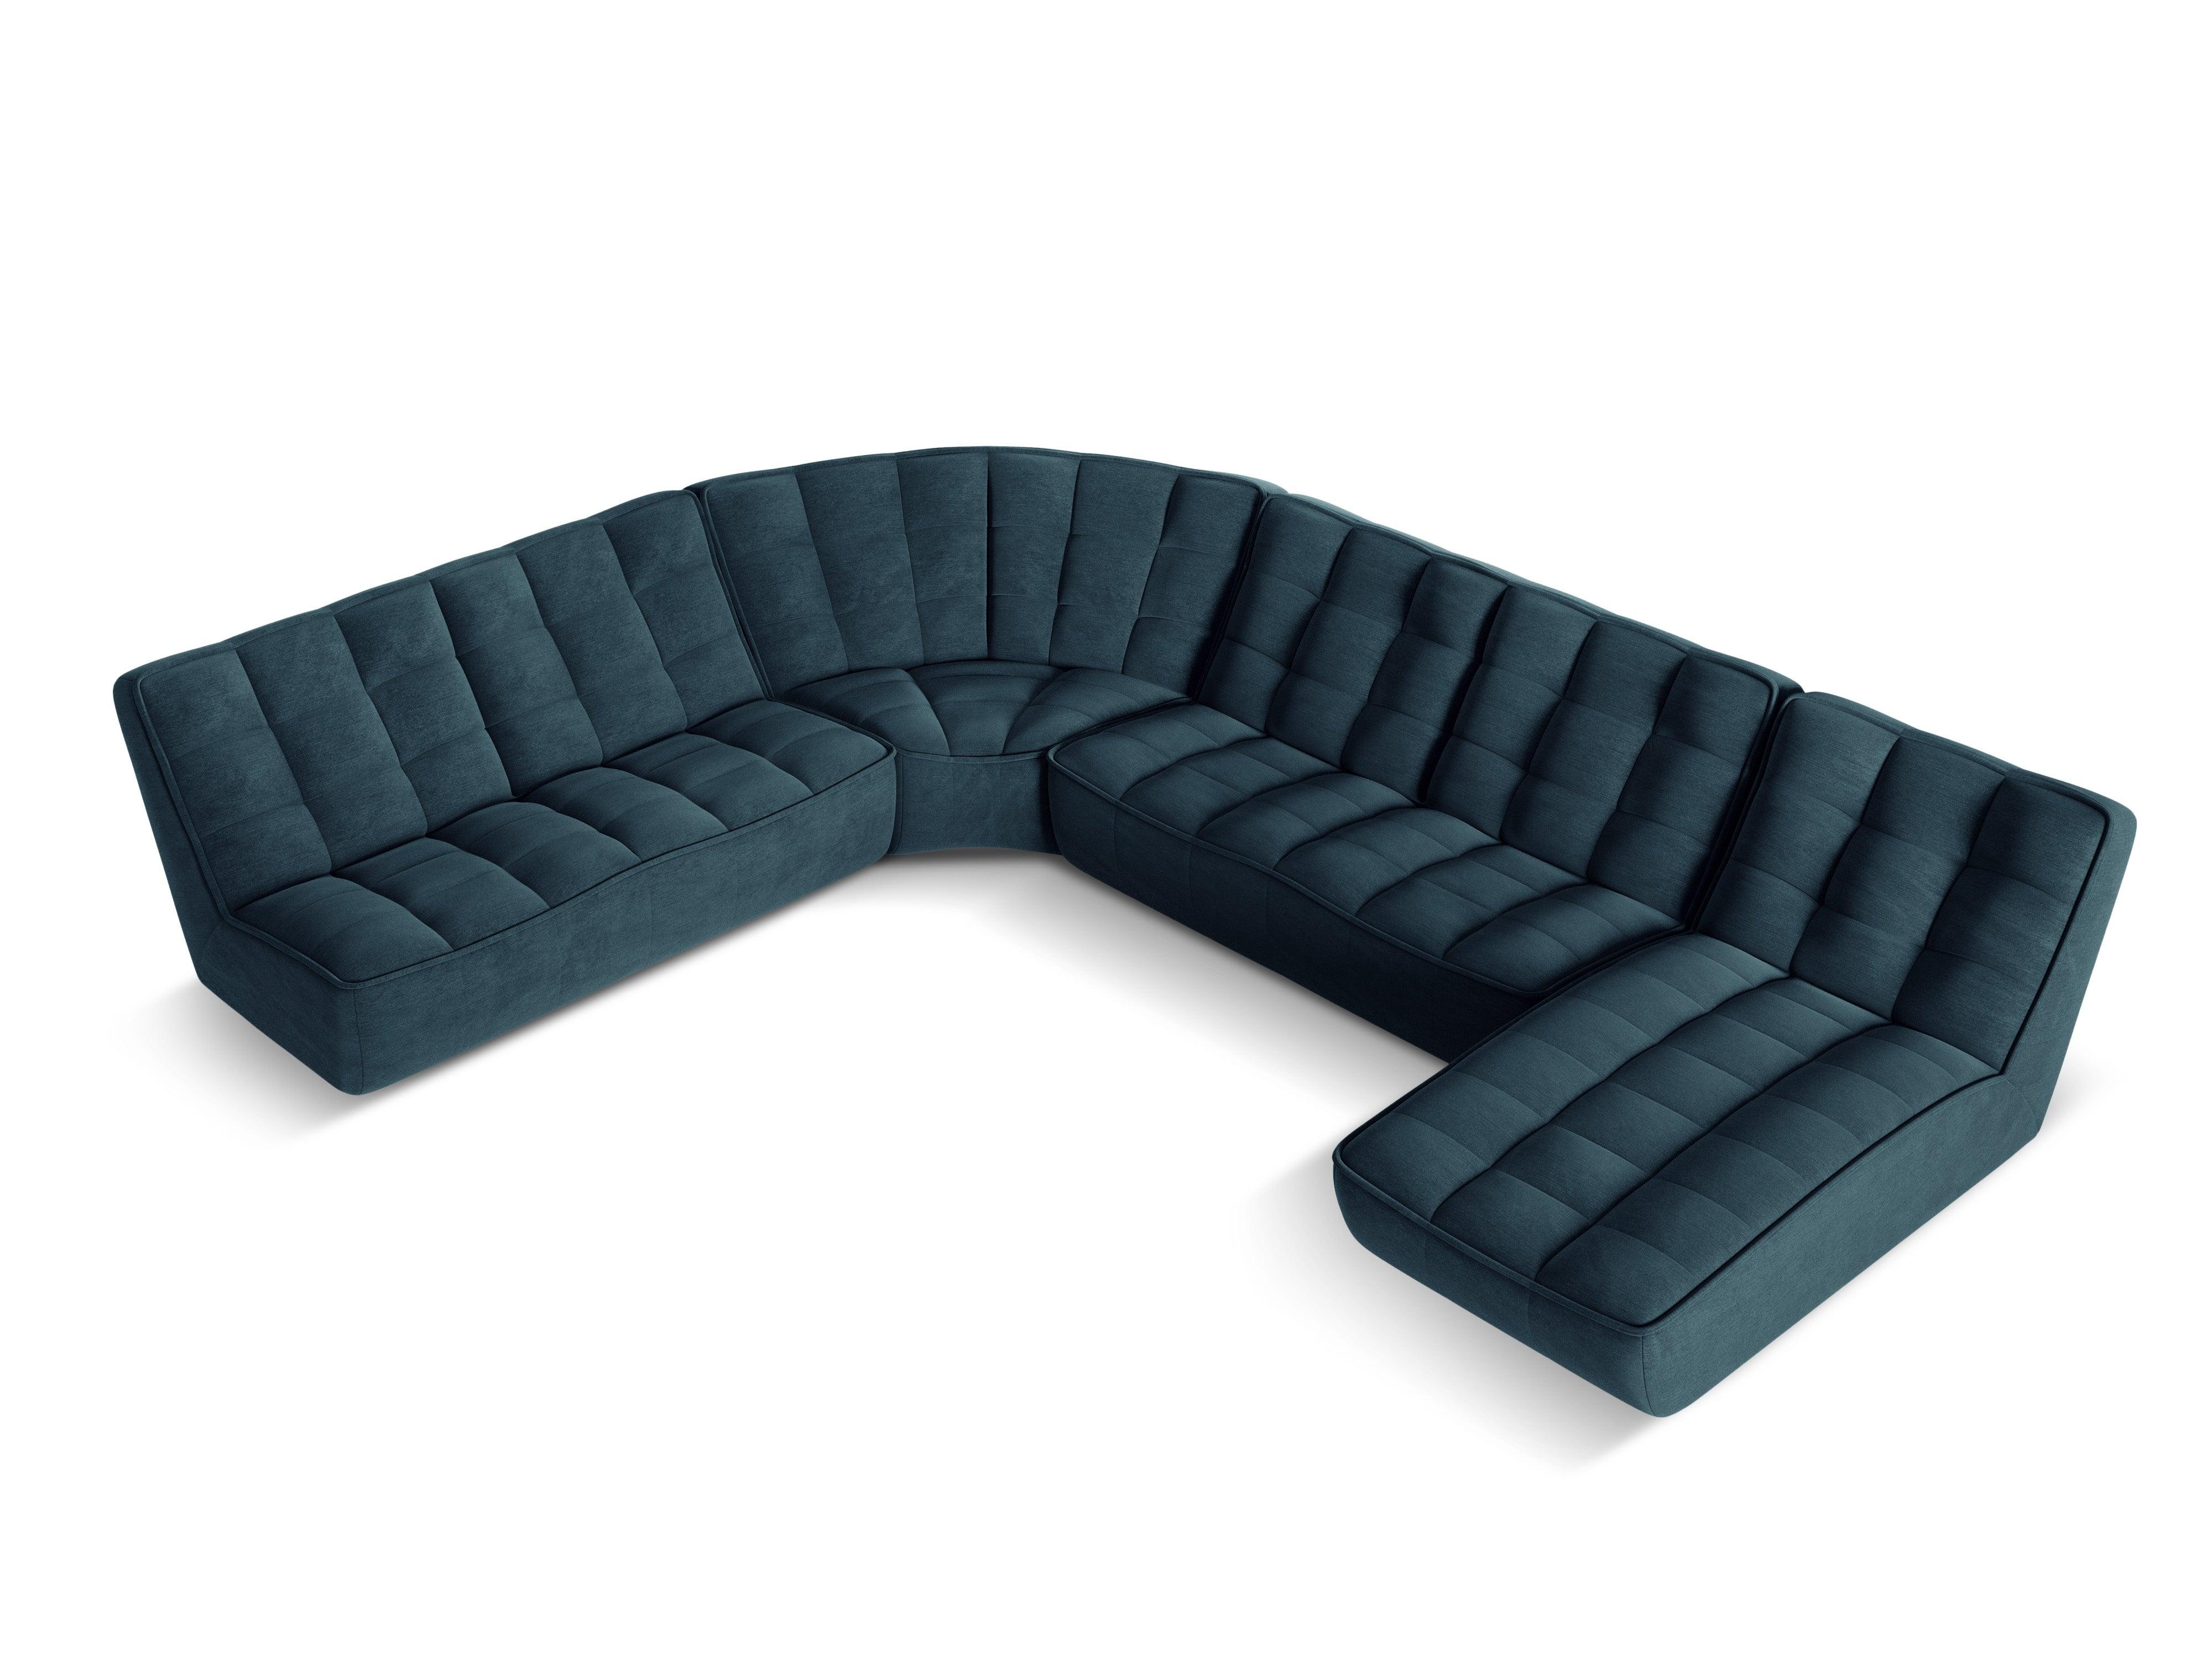 Modular Panoramic Left Corner Sofa, "Moni", 8 Seats, 367x284x91
Made in Europe, Maison Heritage, Eye on Design